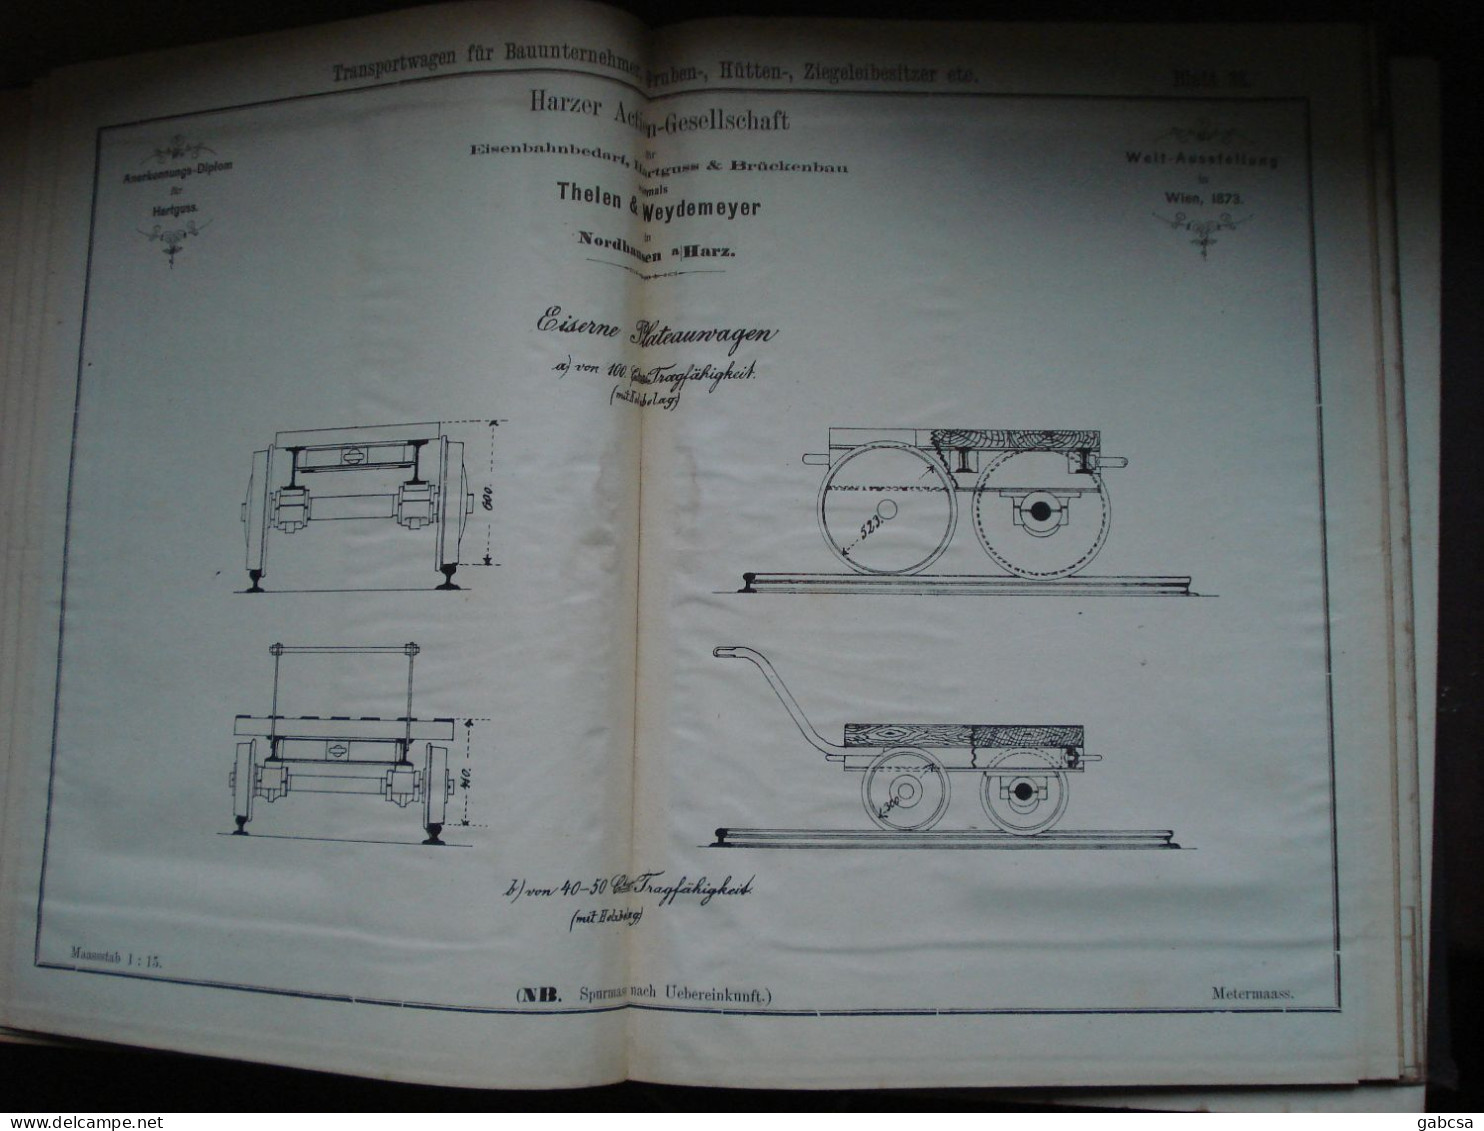 Rollwagen Plans 1872-73 Handmade "Kolos" And 18 Harzer Aktiengesellschaft Plan Printed In Book - Matériel Et Accessoires